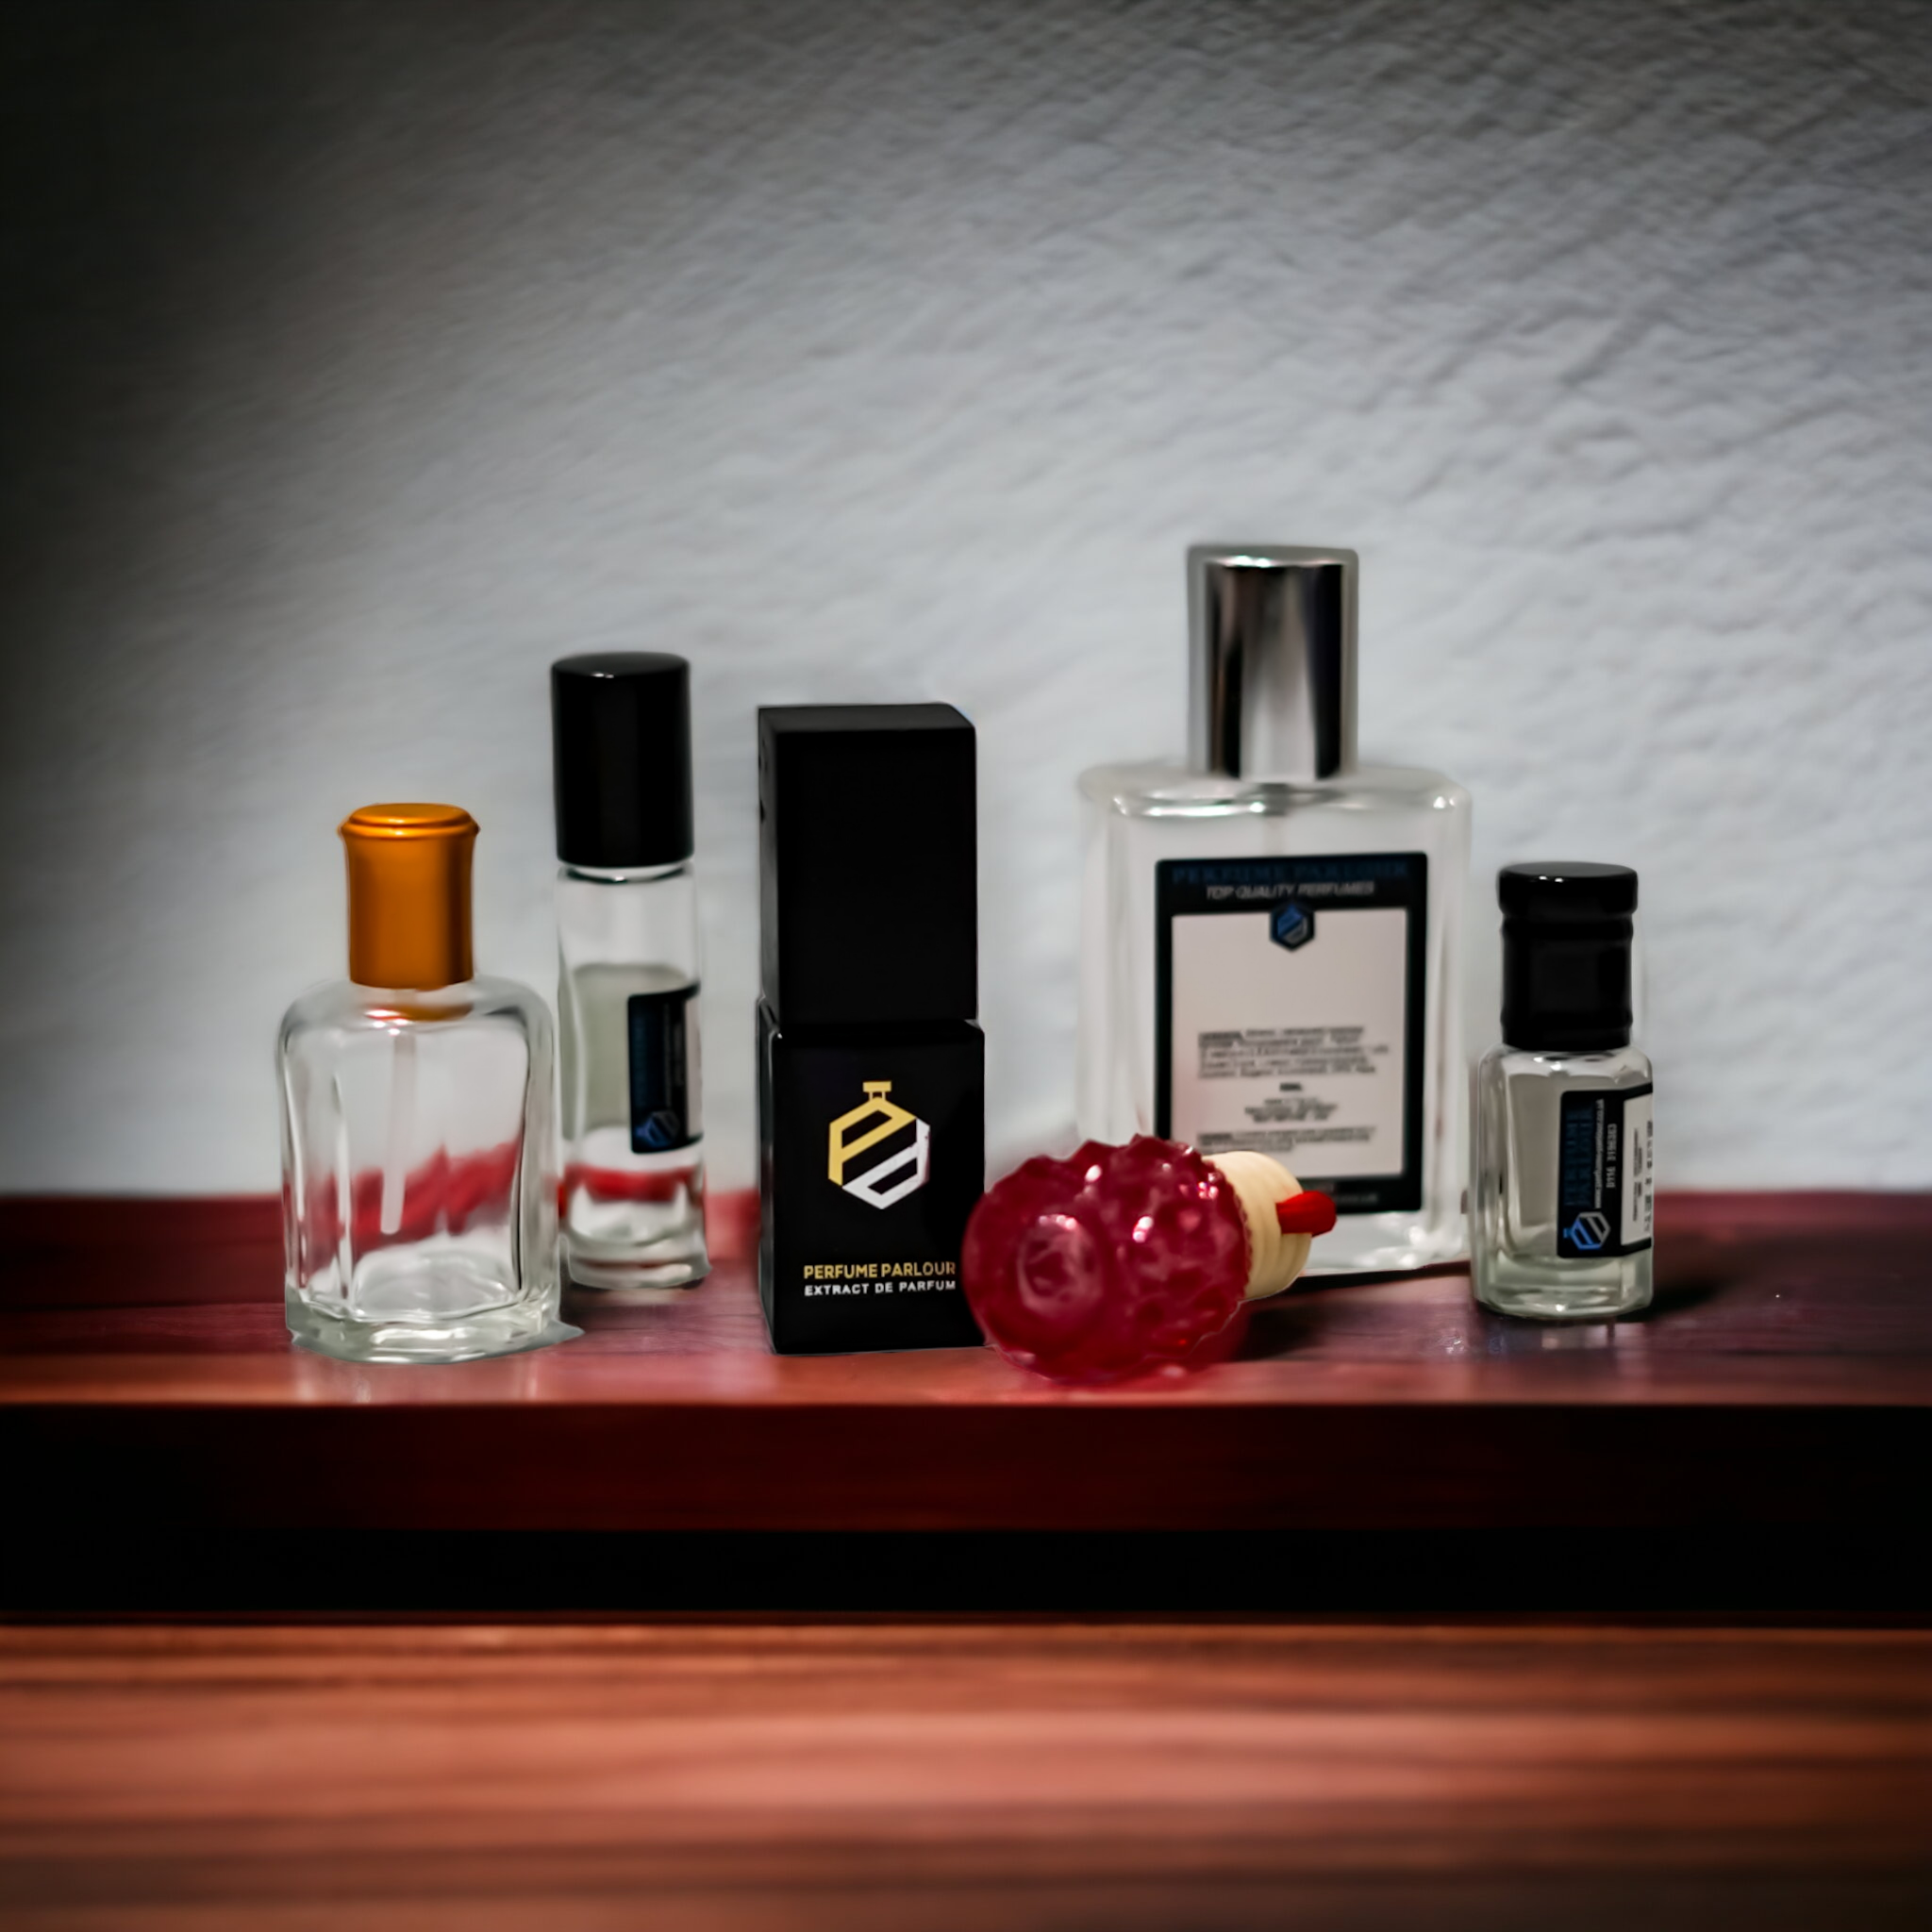 www.perfume-parlour.co.uk